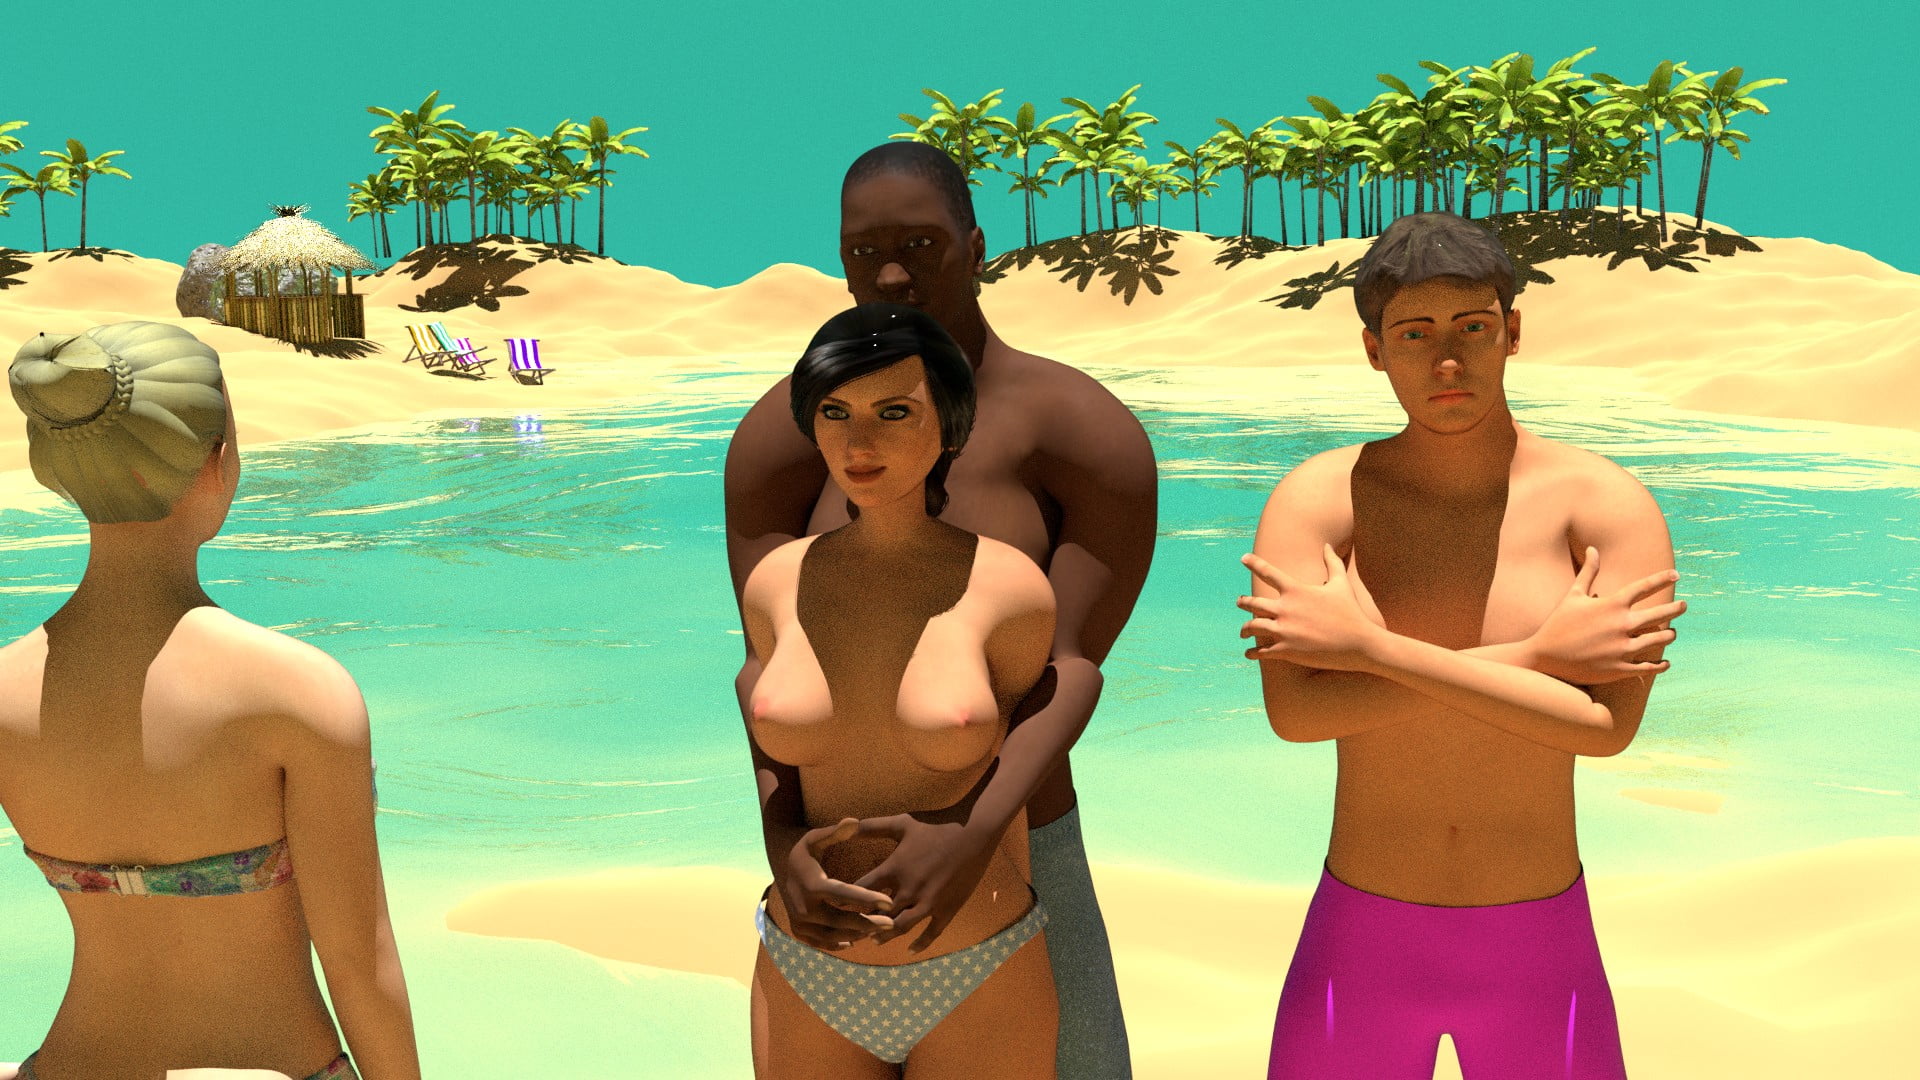 Ren'Py] Deserted Island Dreams - v0.42 by DeDagames 18+ Adult xxx Porn Game  Download